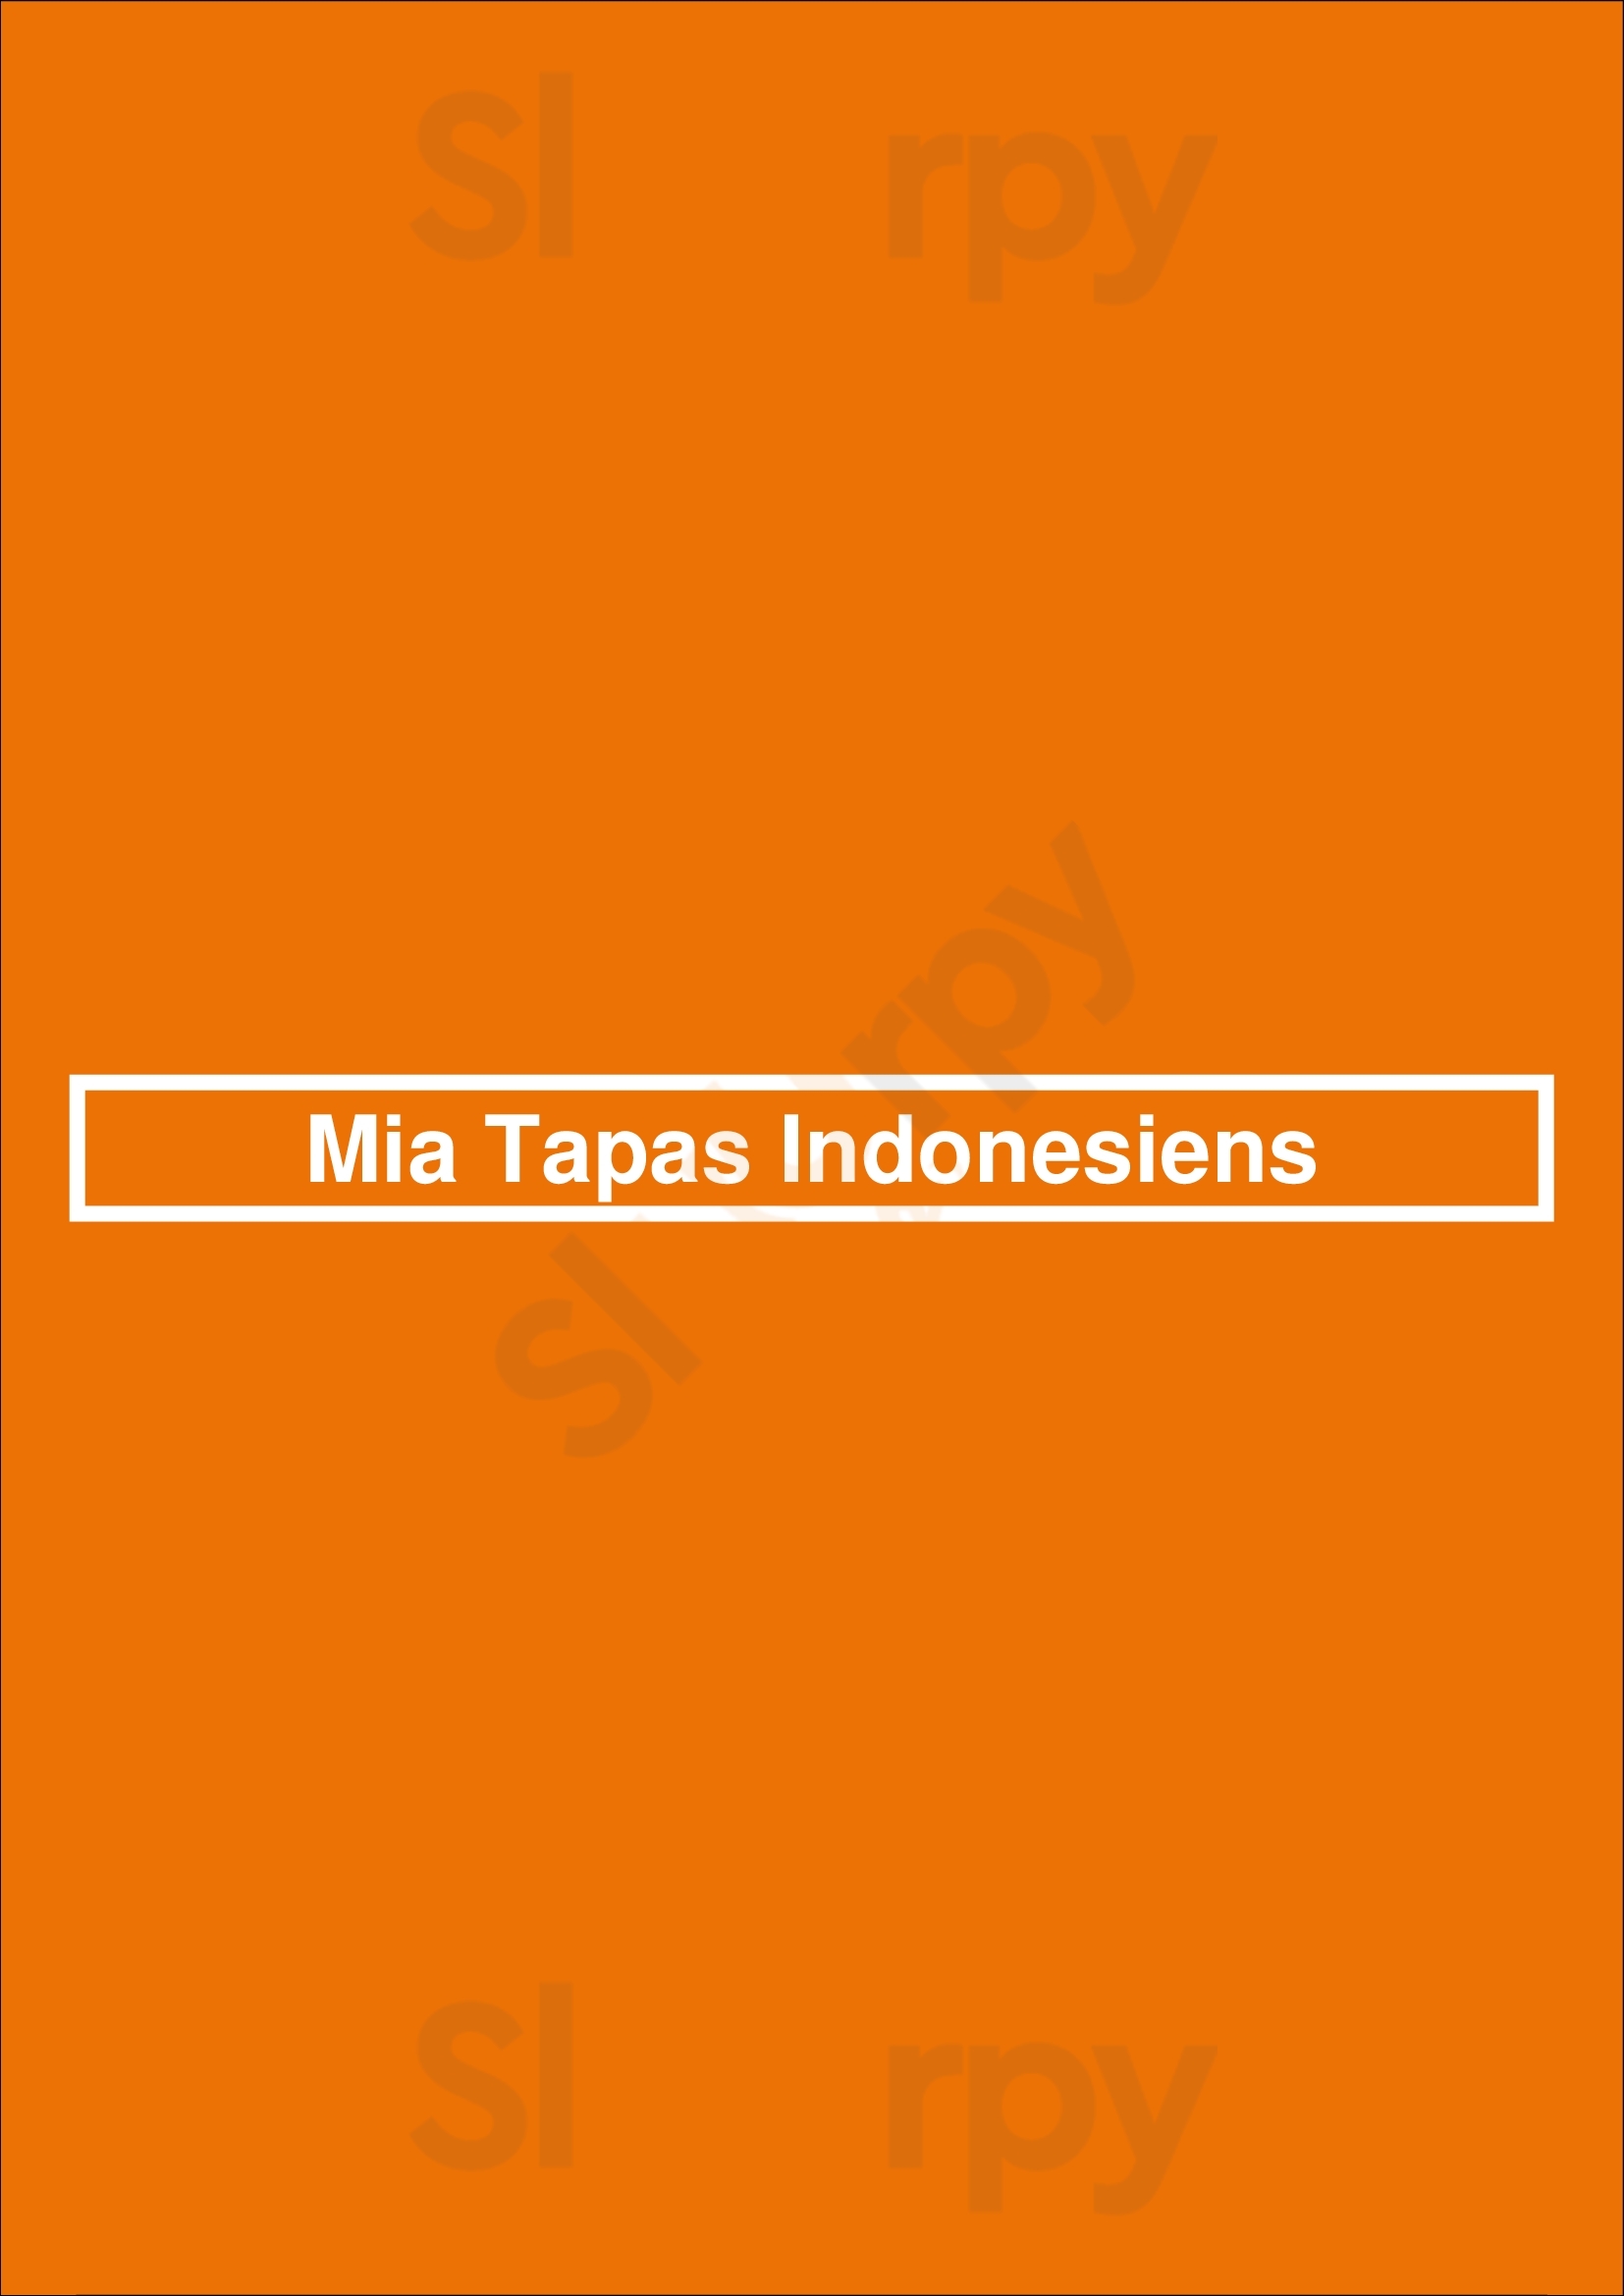 Mia Tapas Indonesiens Montreal Menu - 1